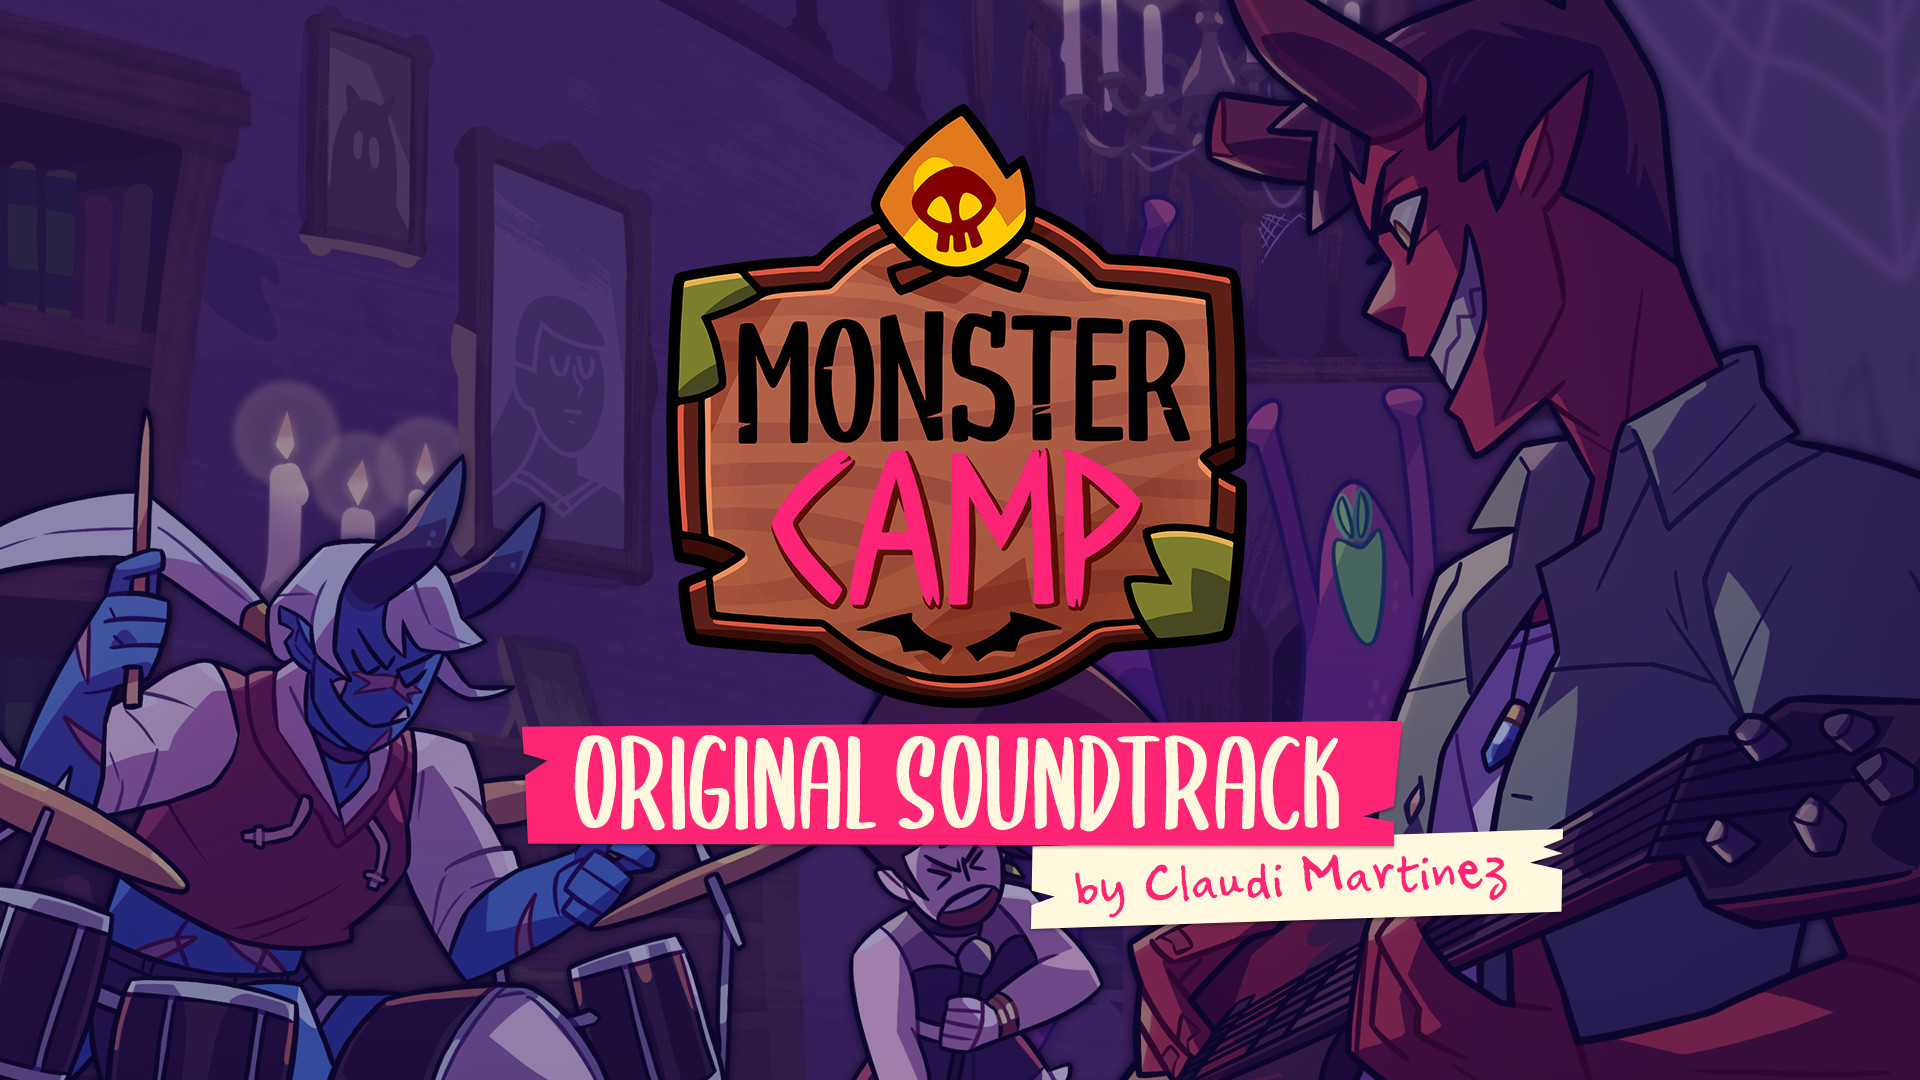 Monster Prom 2: Monster Camp Soundtrack Featured Screenshot #1